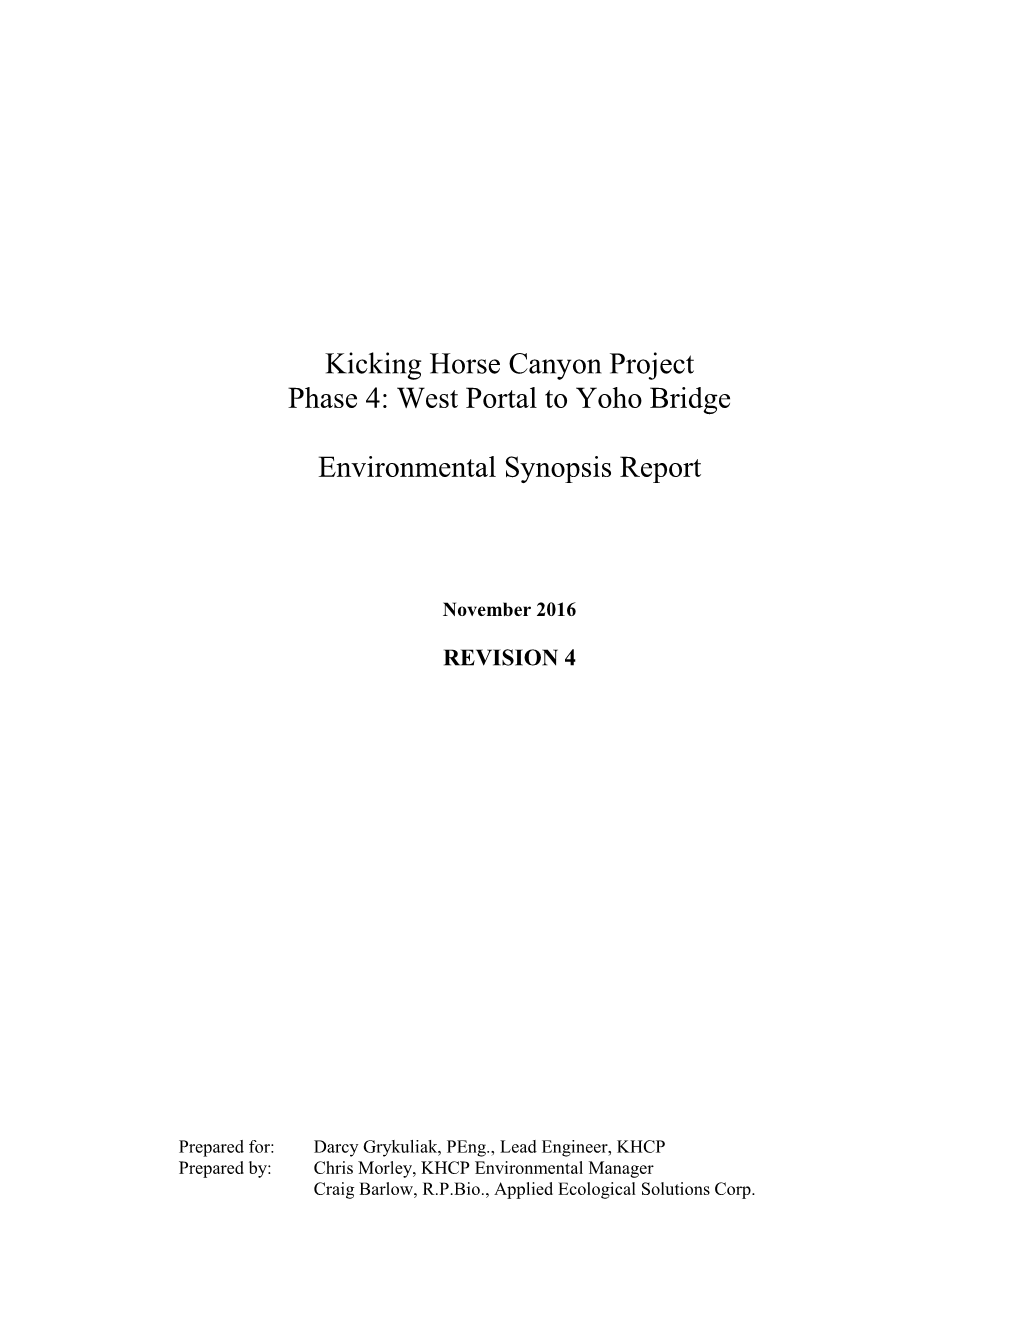 Kicking Horse Canyon Project Phase 4 Environmental Synopsis Report